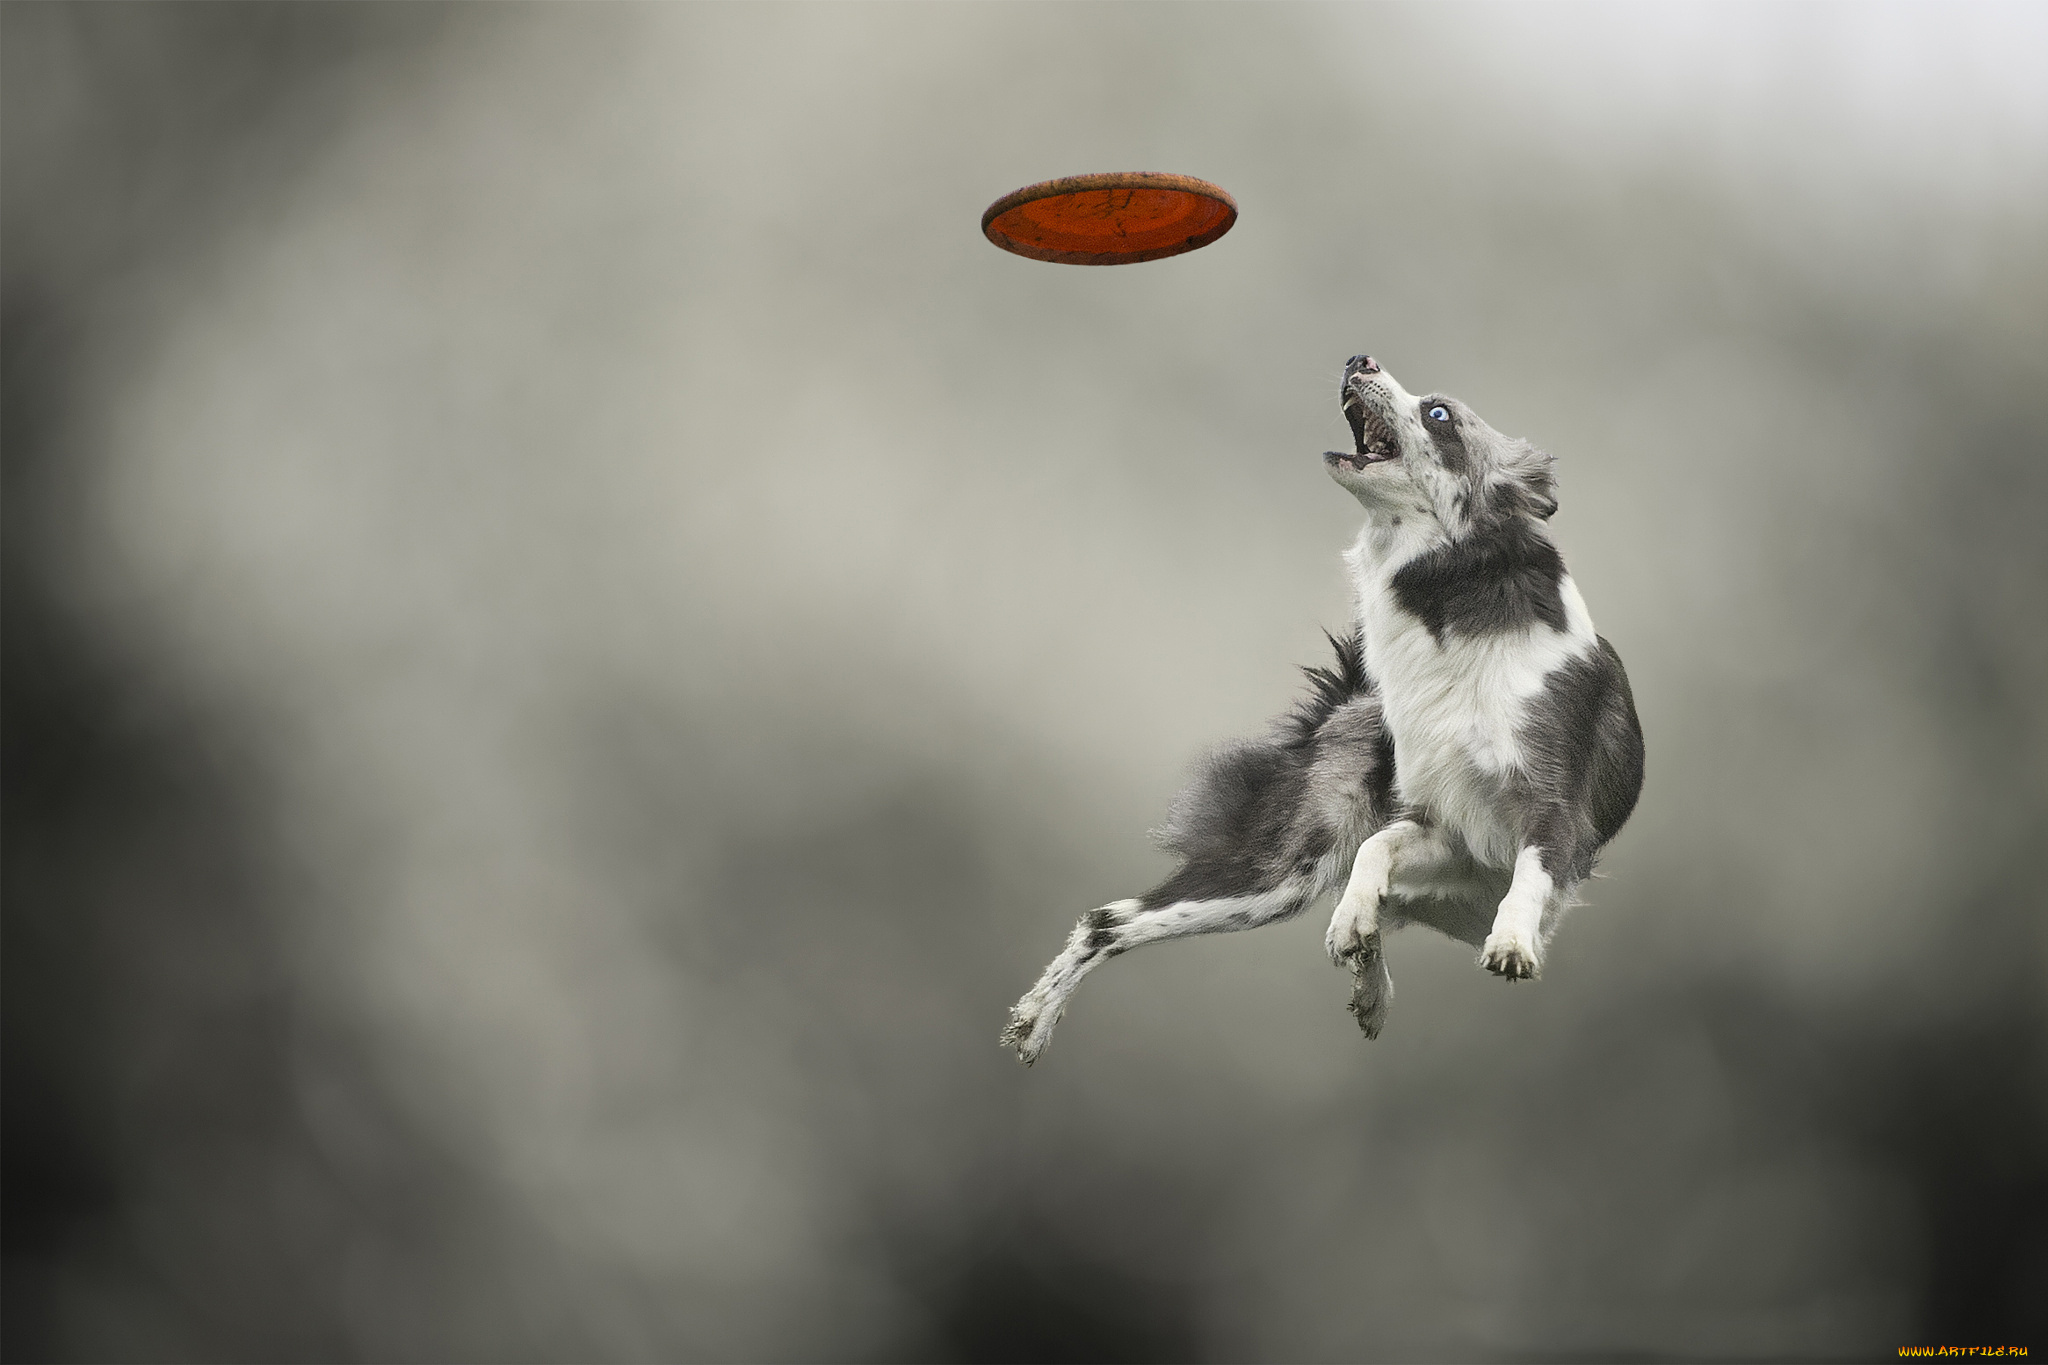 My dog can fly. Бордер колли в прыжке. Бордер колли дог фризби. Бордер колли Апорт. Собака прыгает.